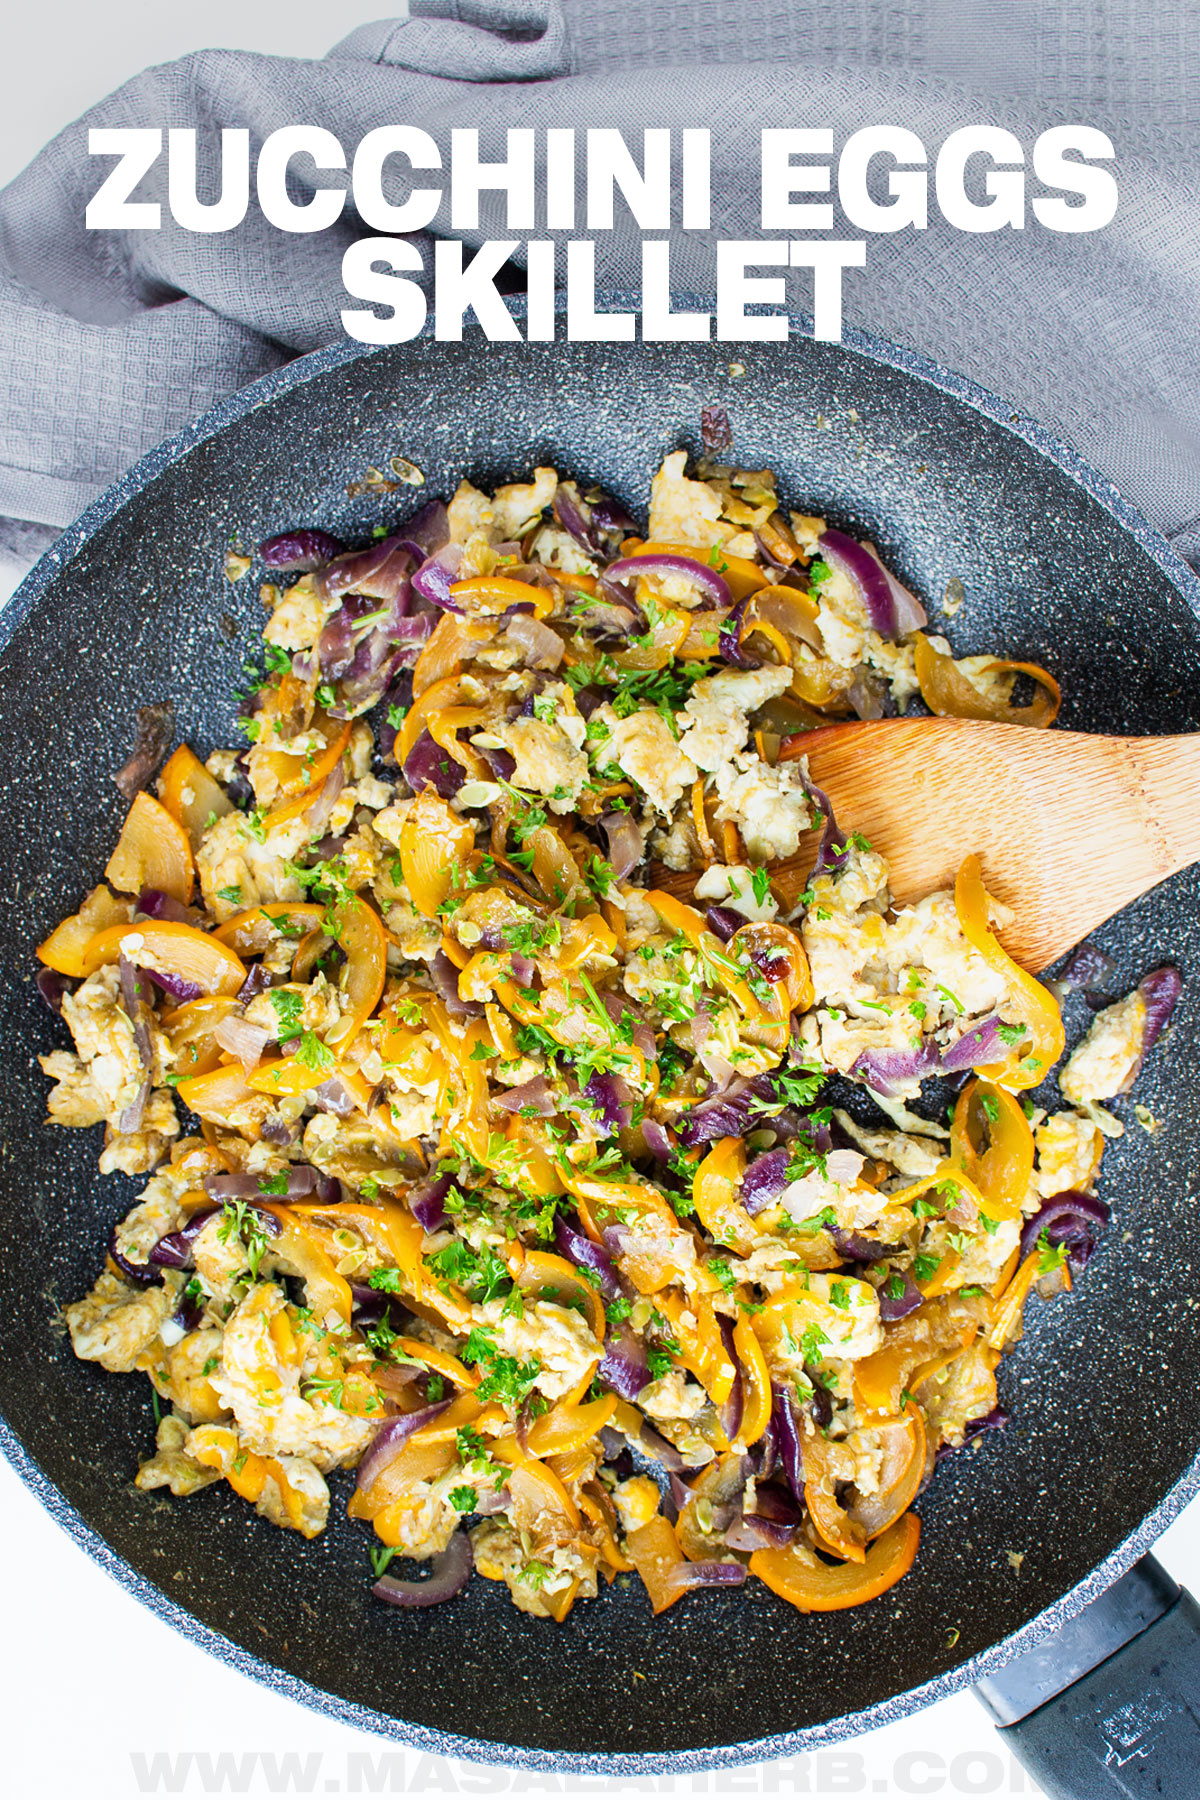 Zucchini and Eggs Skillet Recipe cover image